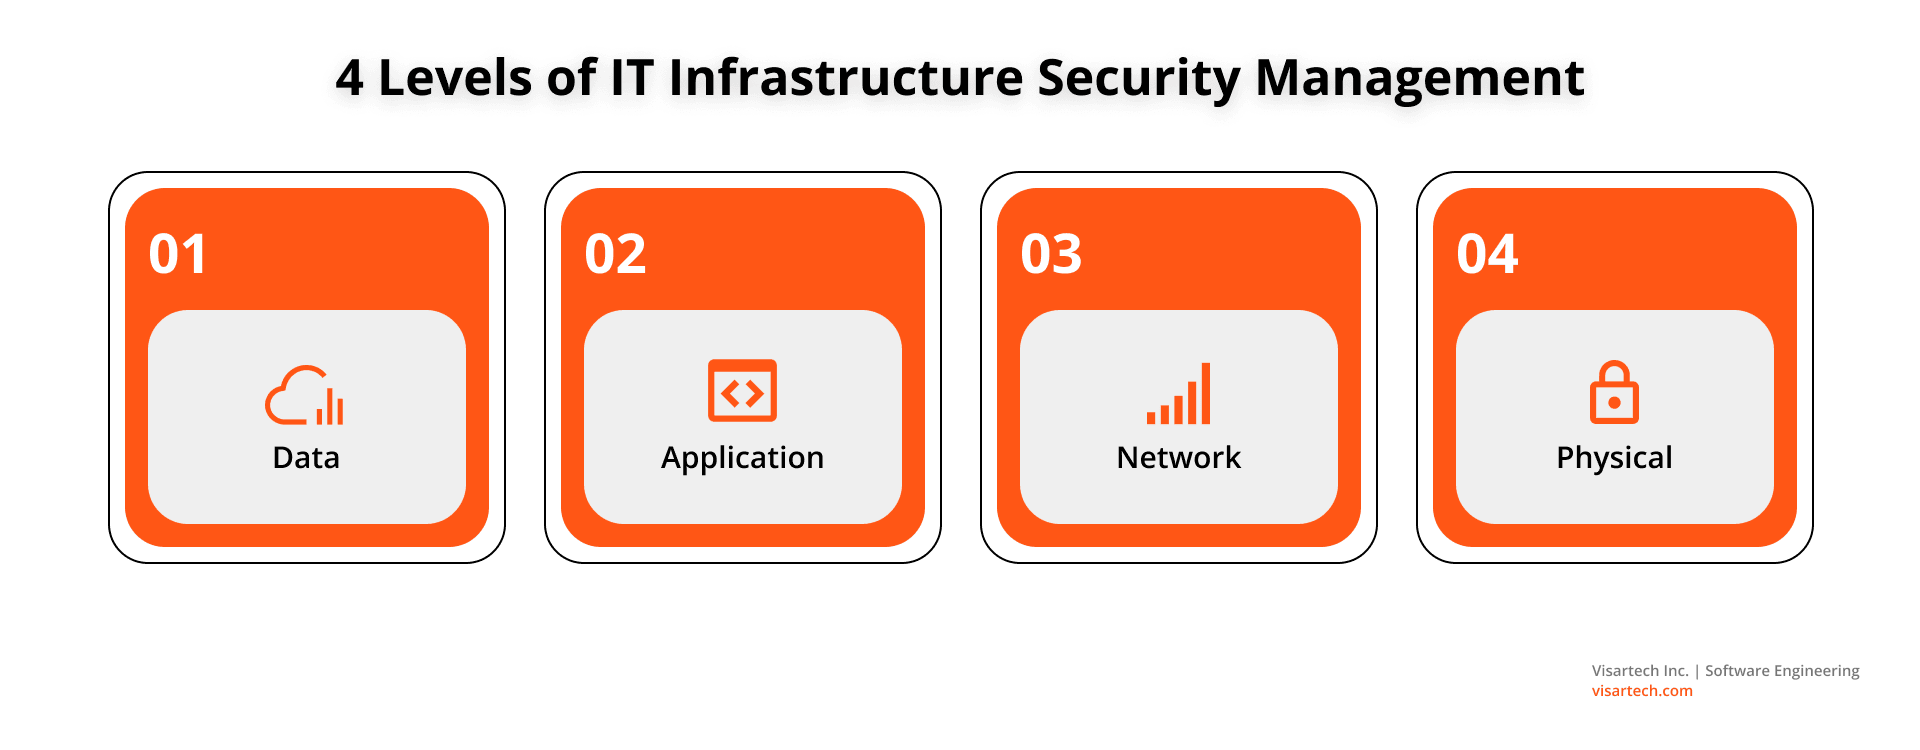 4 Levels of IT Infrastructure Security Management - Visartech Blog